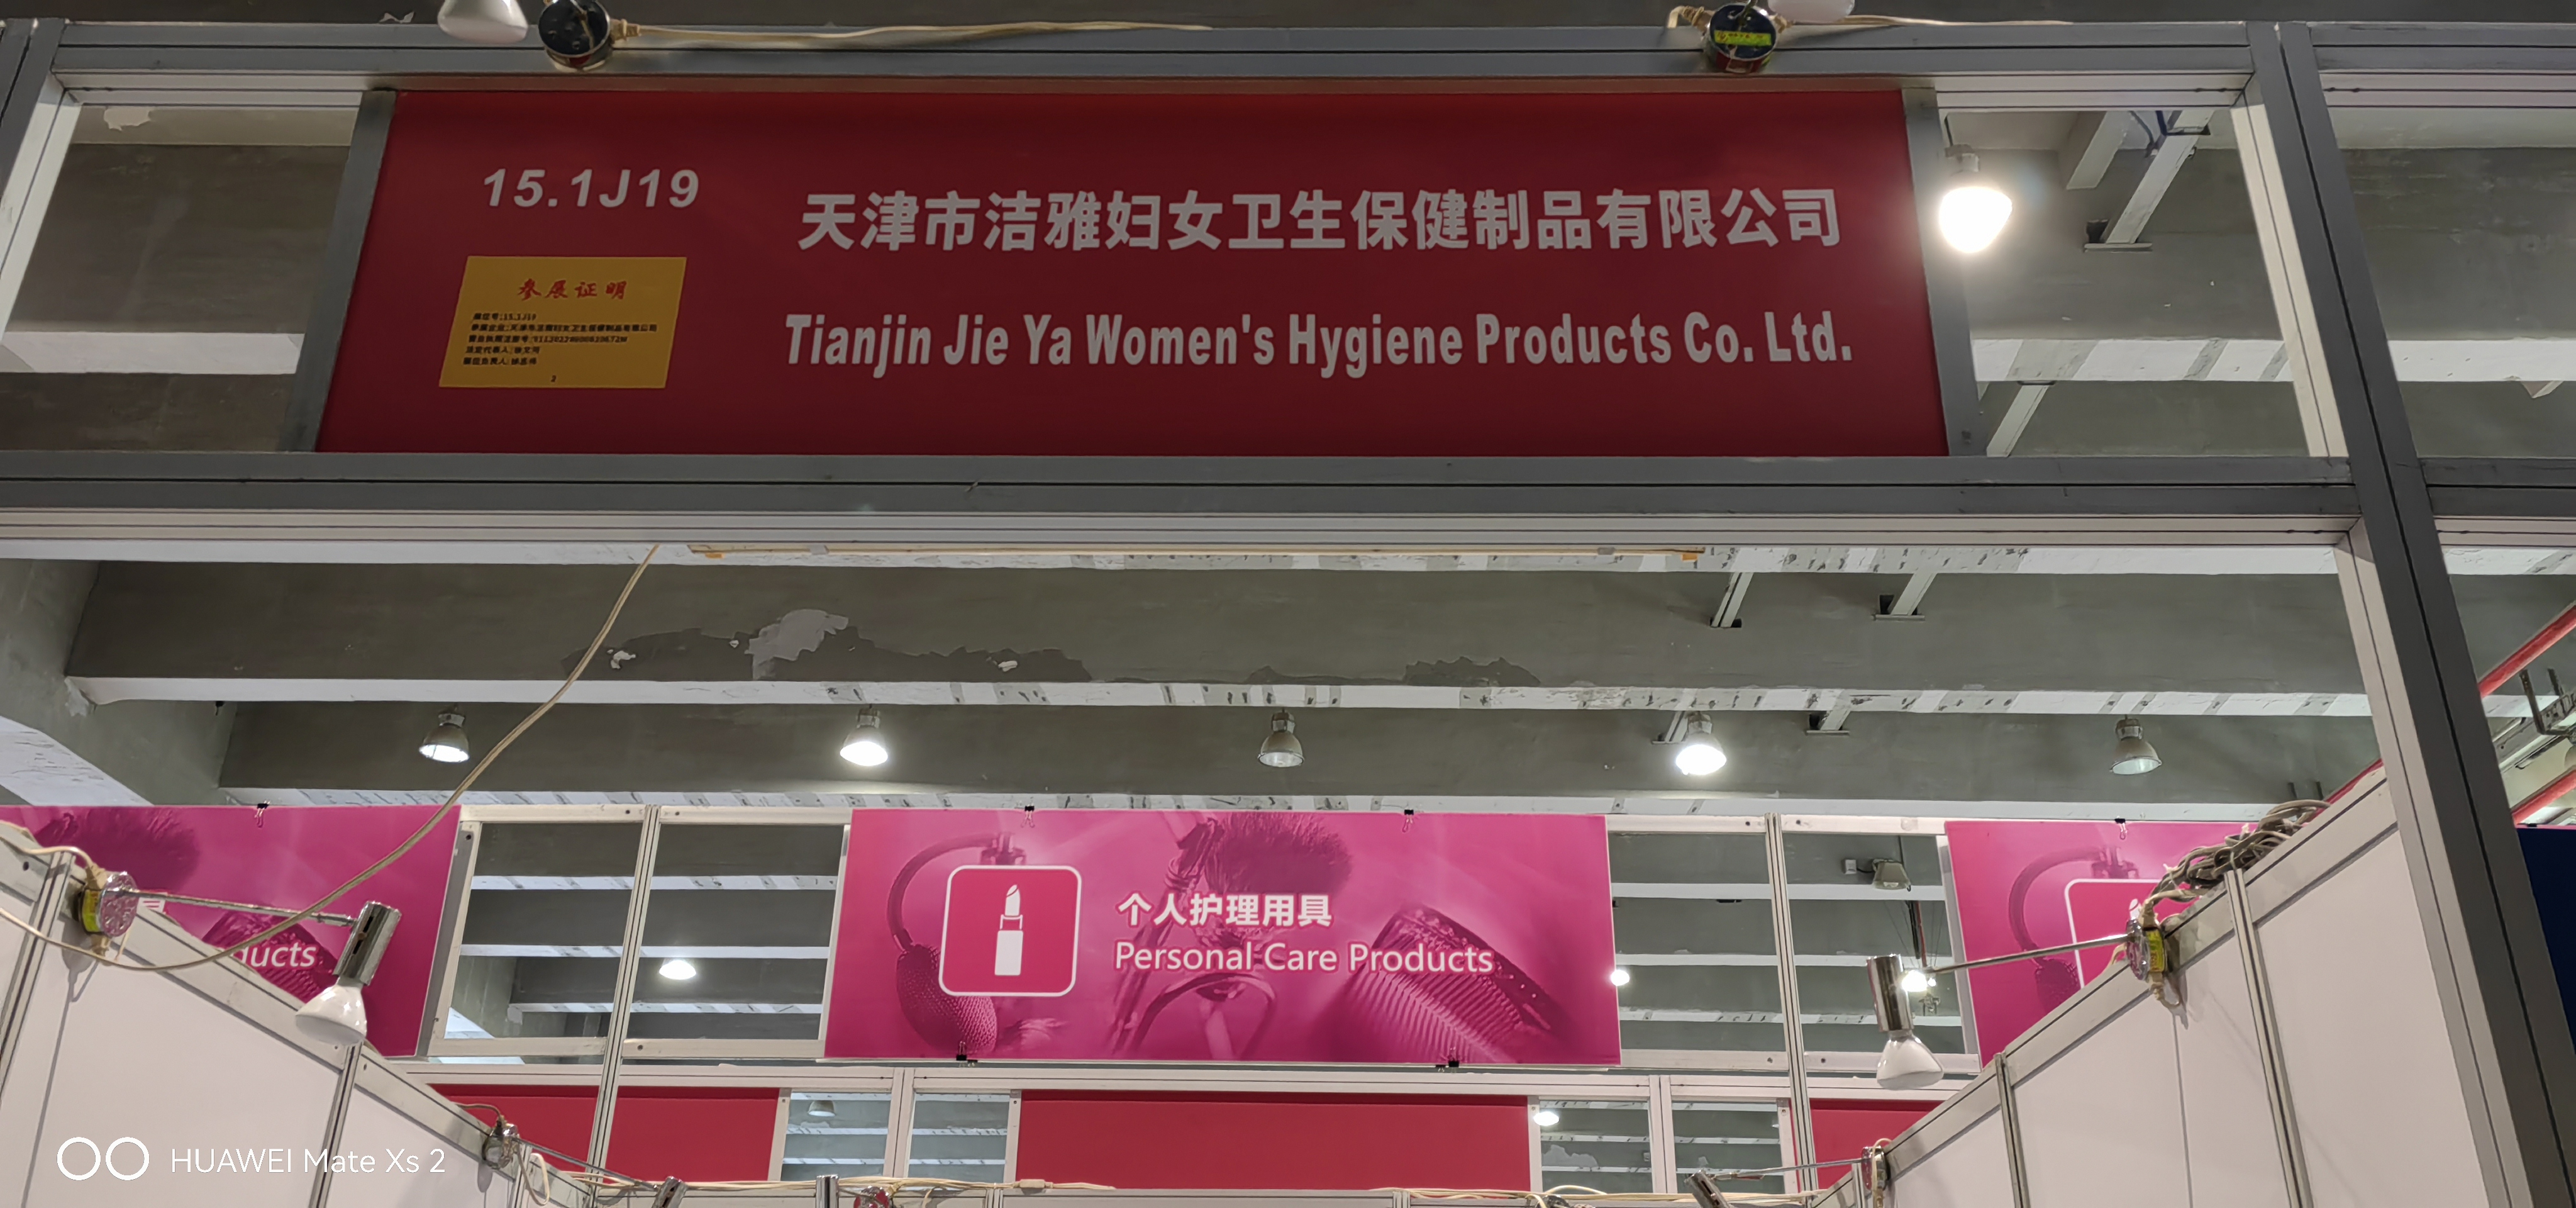 L'esposizione internazionale per il semestre 203-Tianjin Jieya ti aspetta.